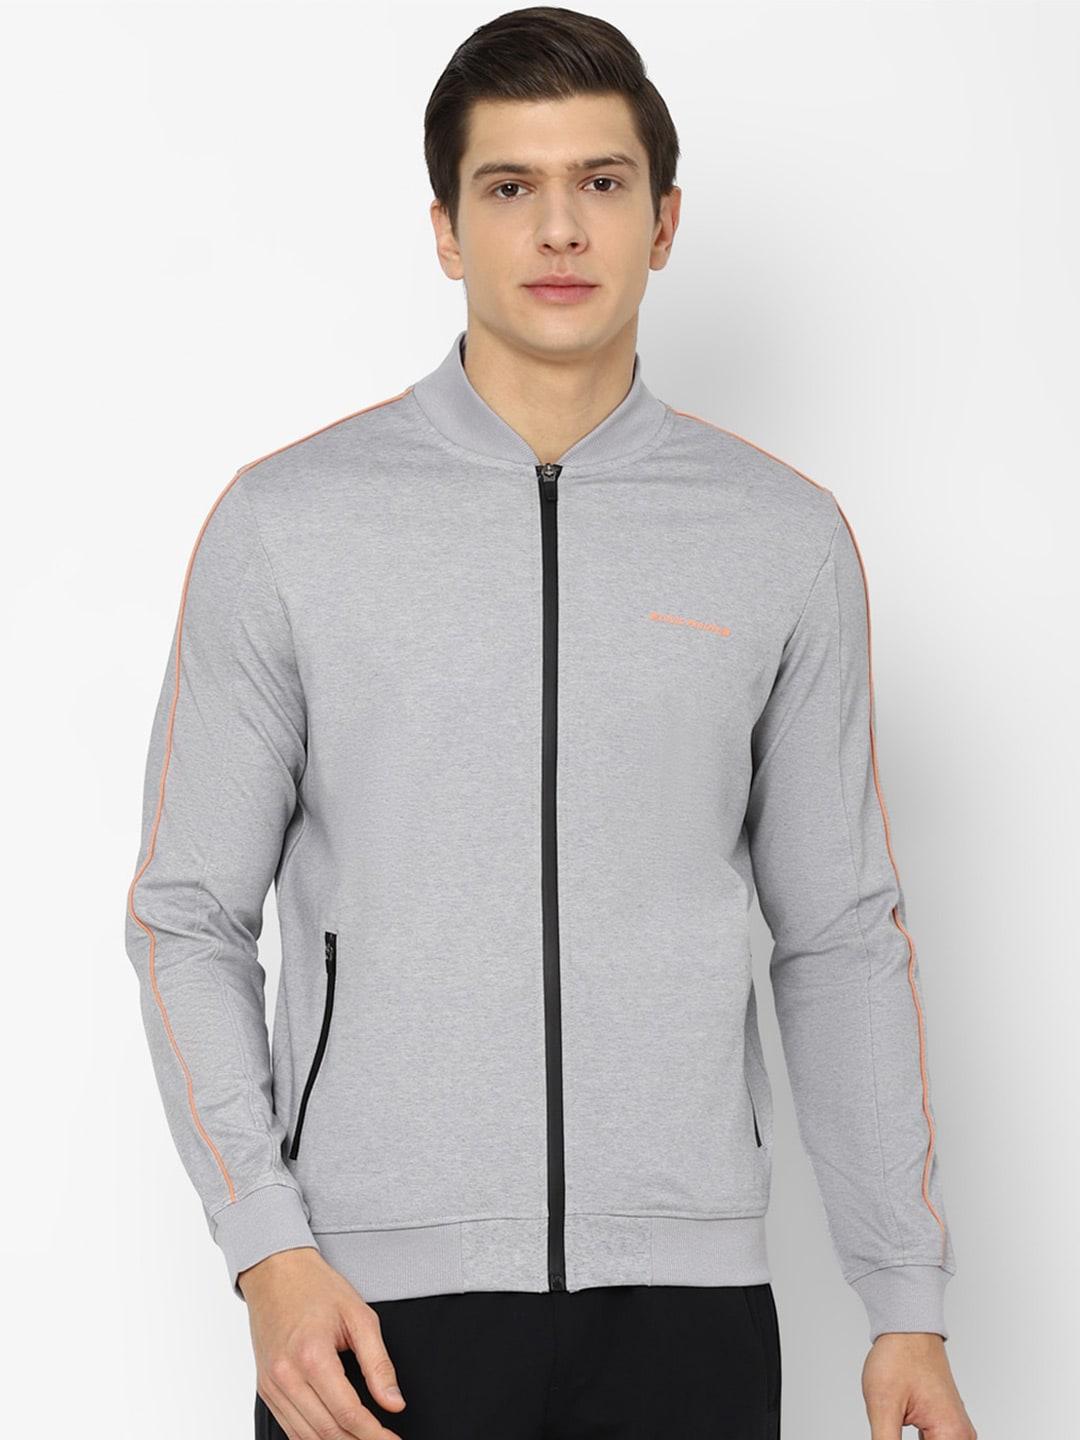 louis philippe men grey sweatshirt 100% cotton